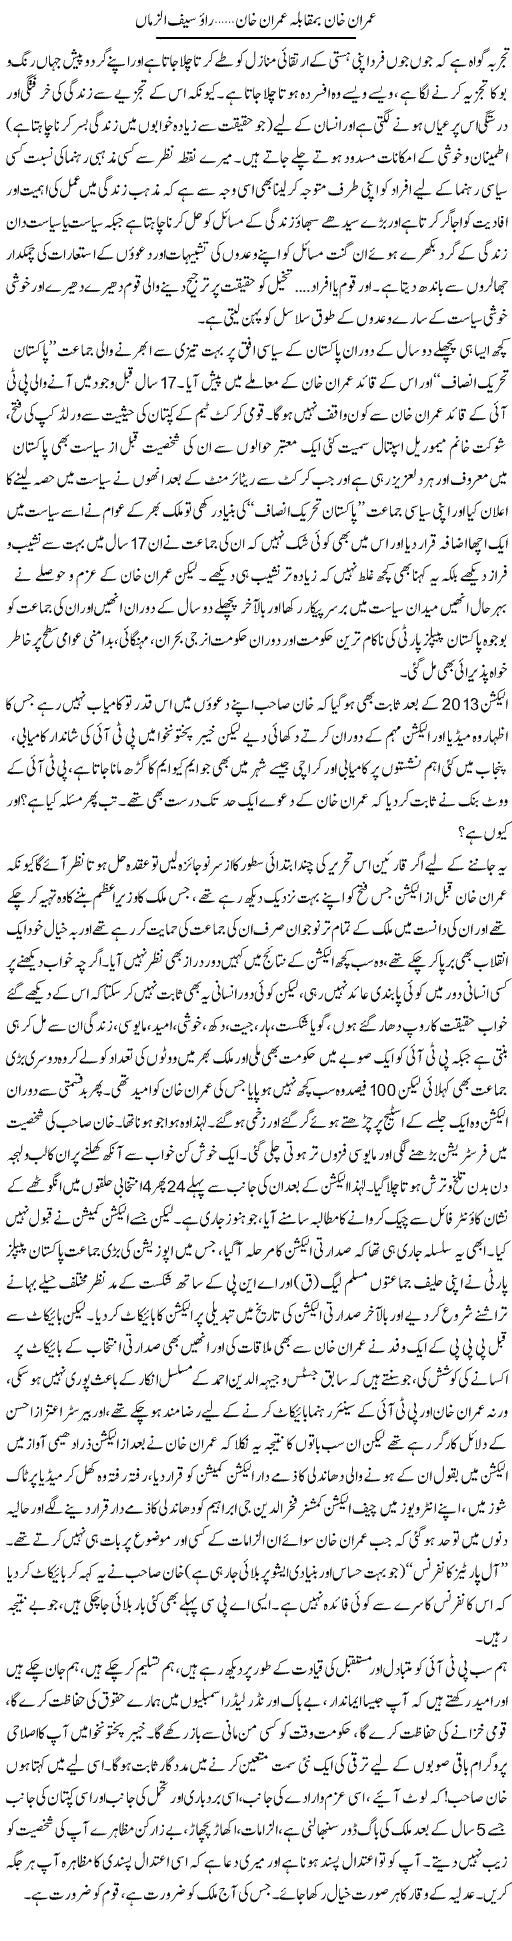 Imran Khan Bamuqabla Imran Khan | Rao Saif U Zaman | Daily Urdu Columns